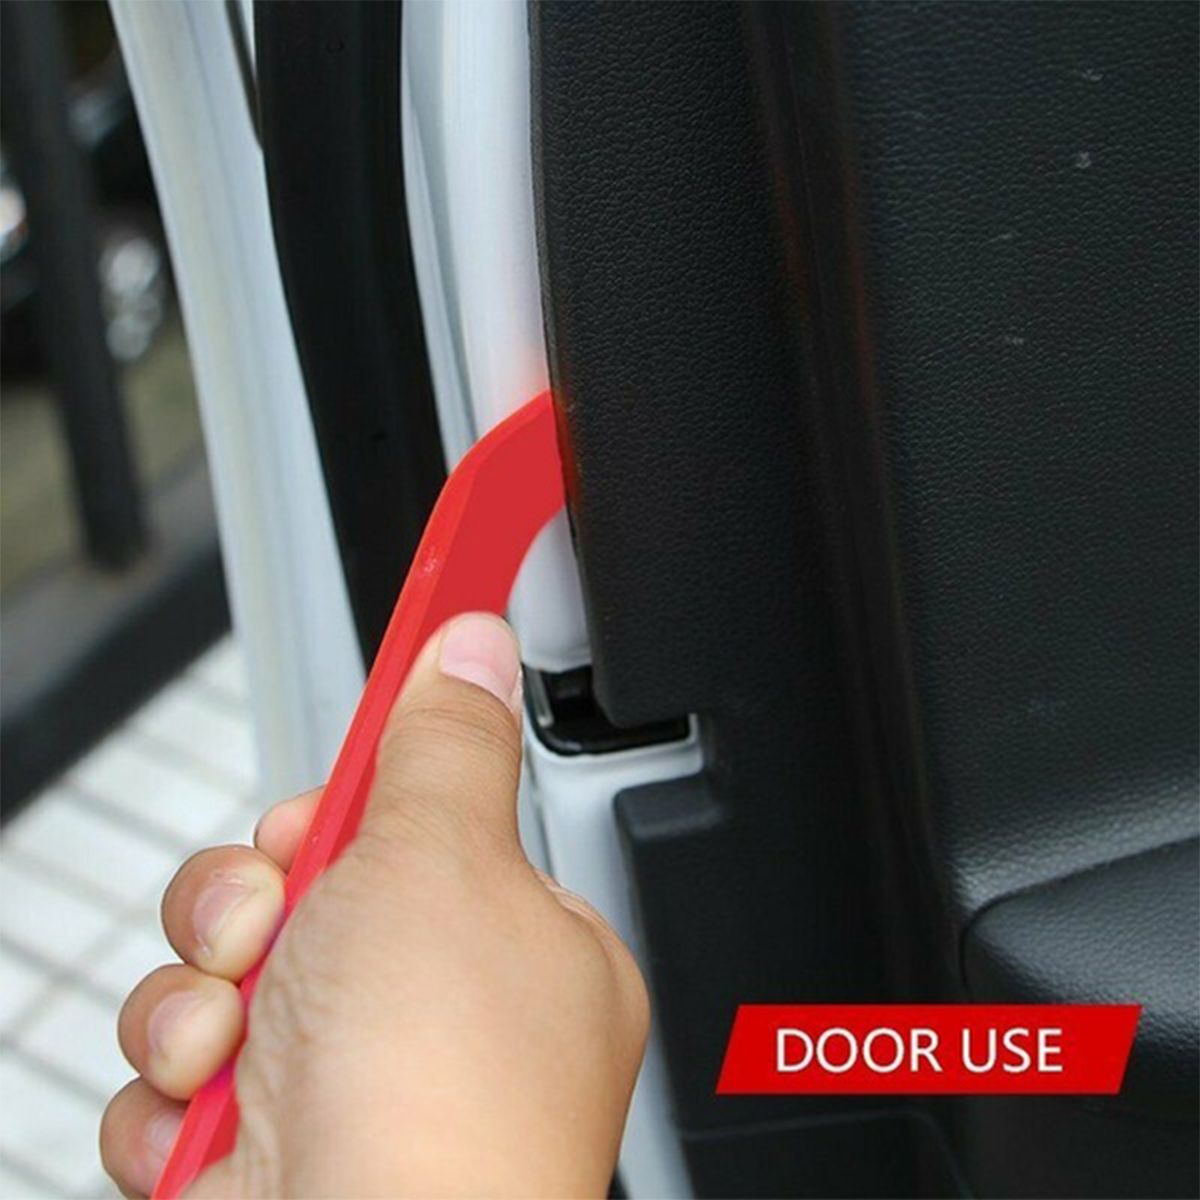 38Pcs-Car-Trim-Removal-Tool-Auto-Hand-Tools-Pry-Bar-Dash-Panel-Door-Interior-Kit-1668307